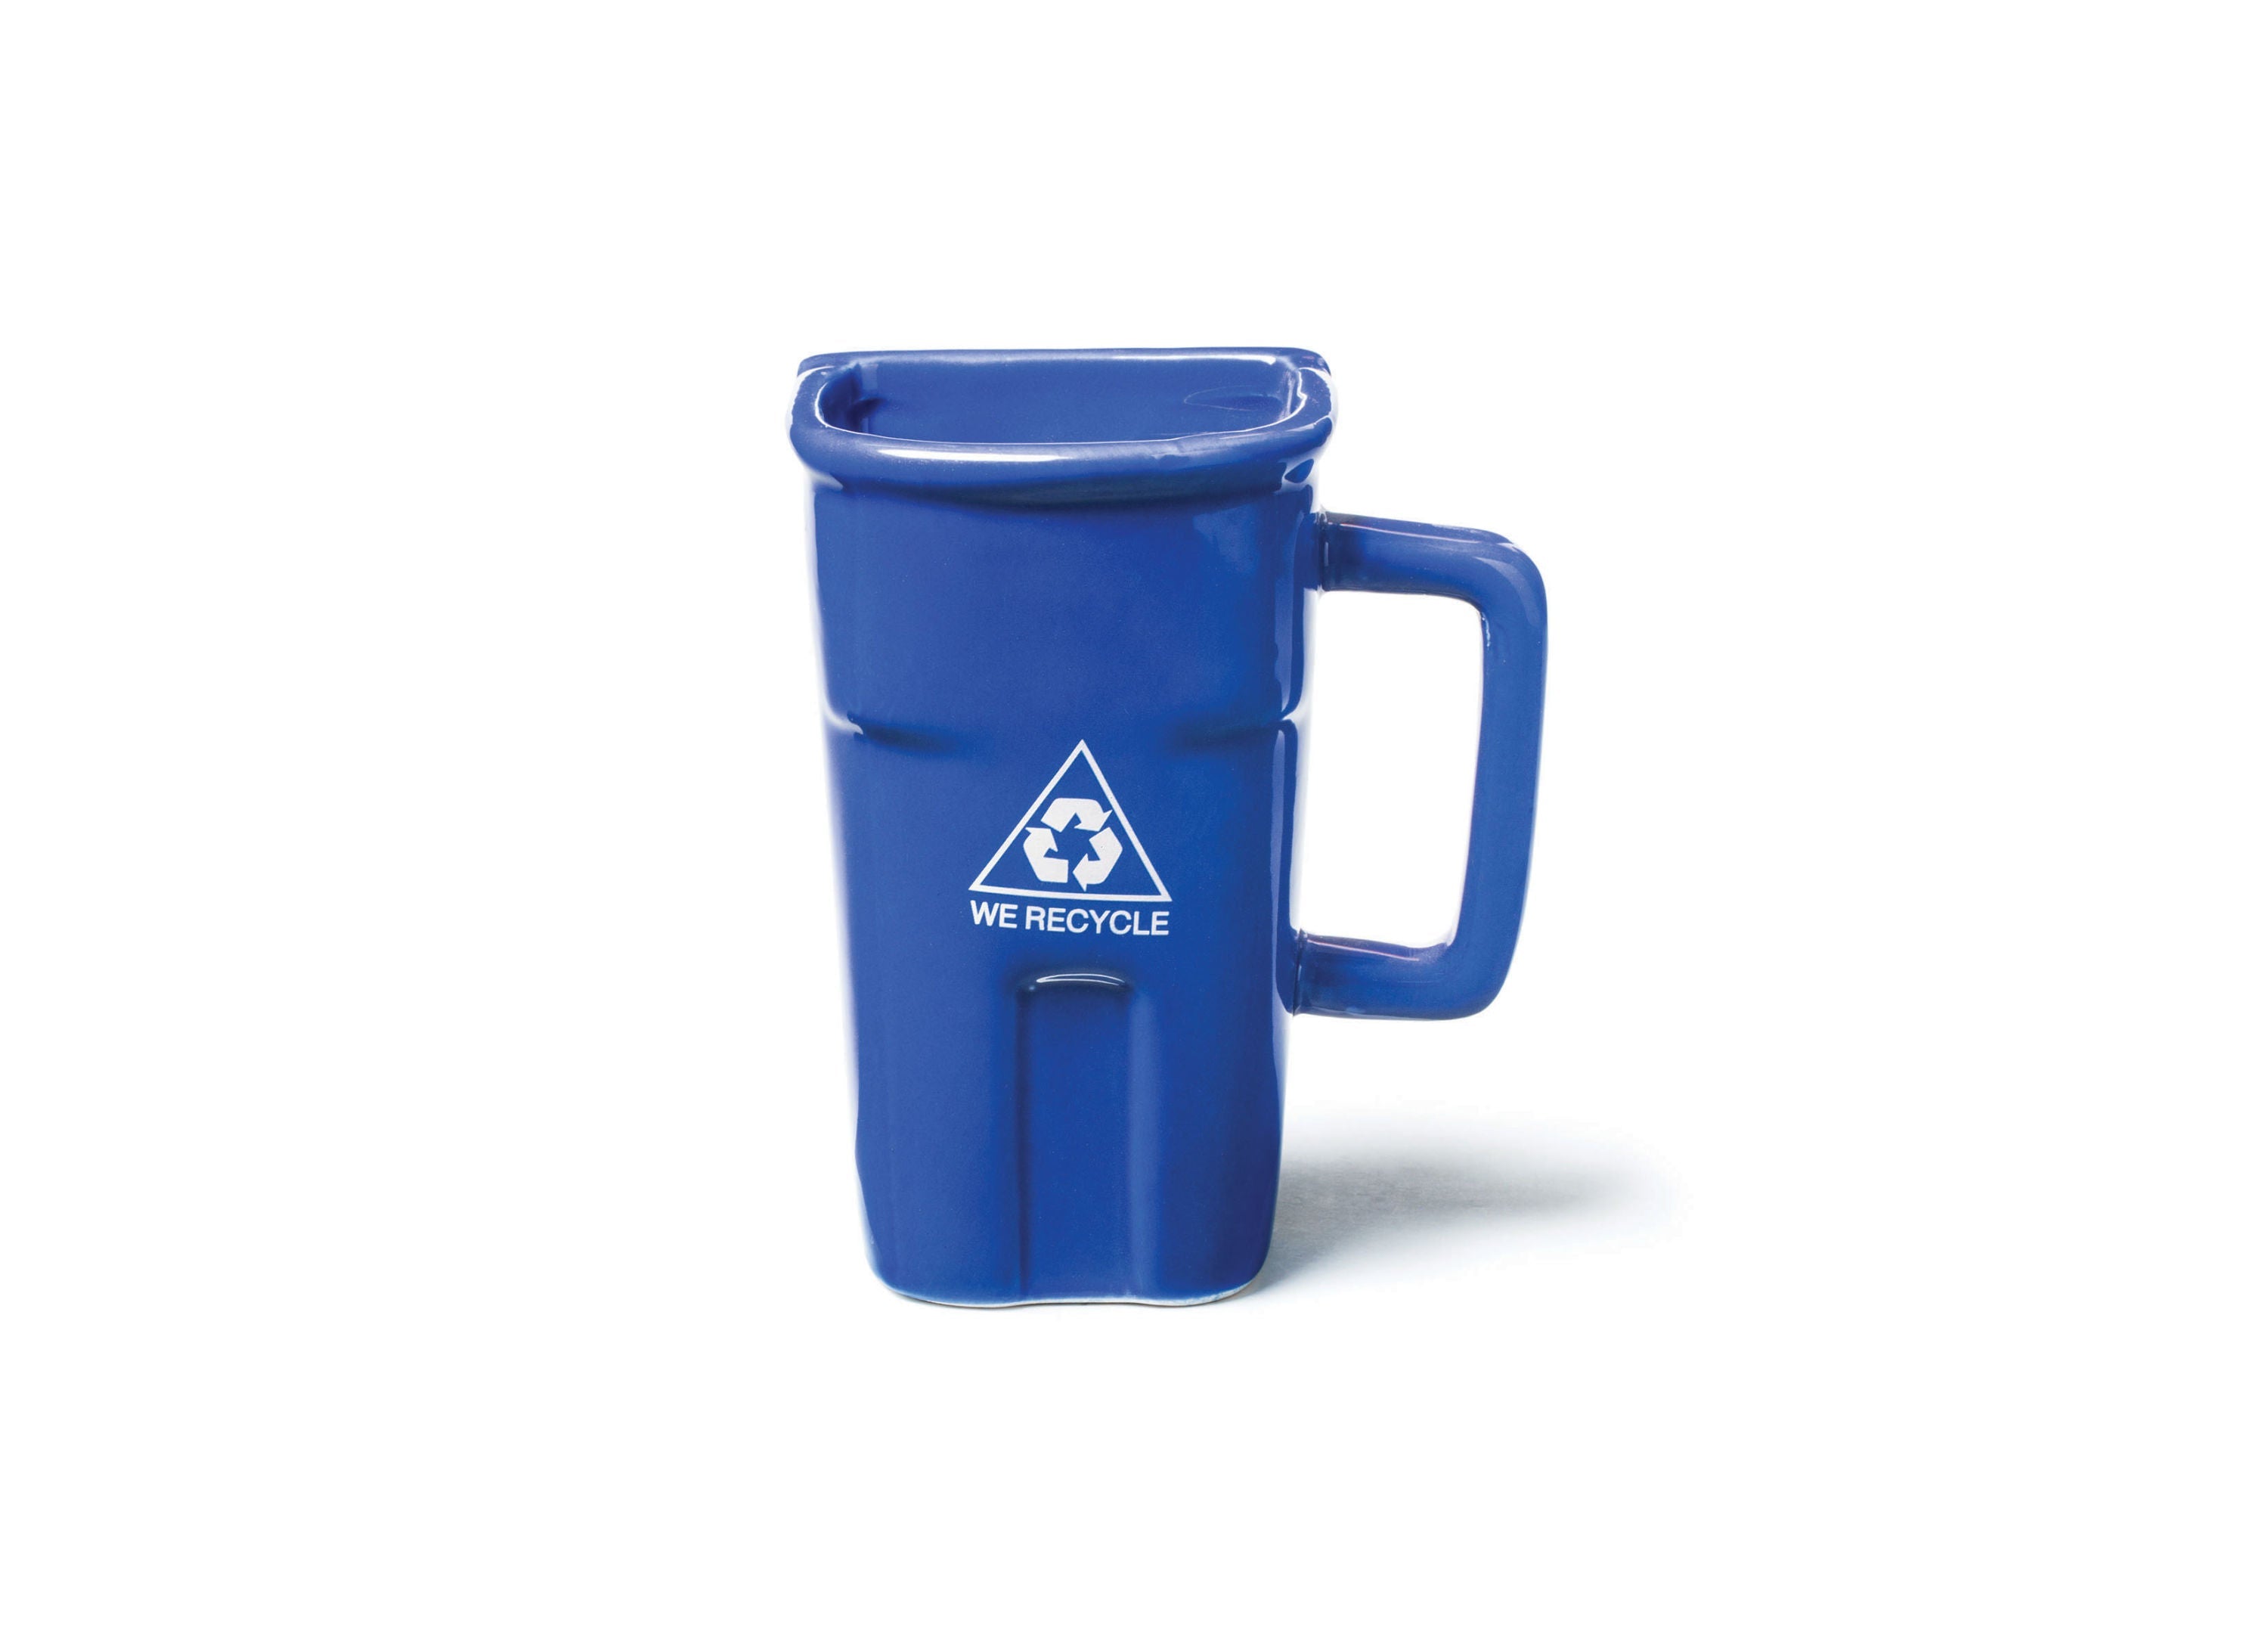 Recycle Bin Coffee Mug